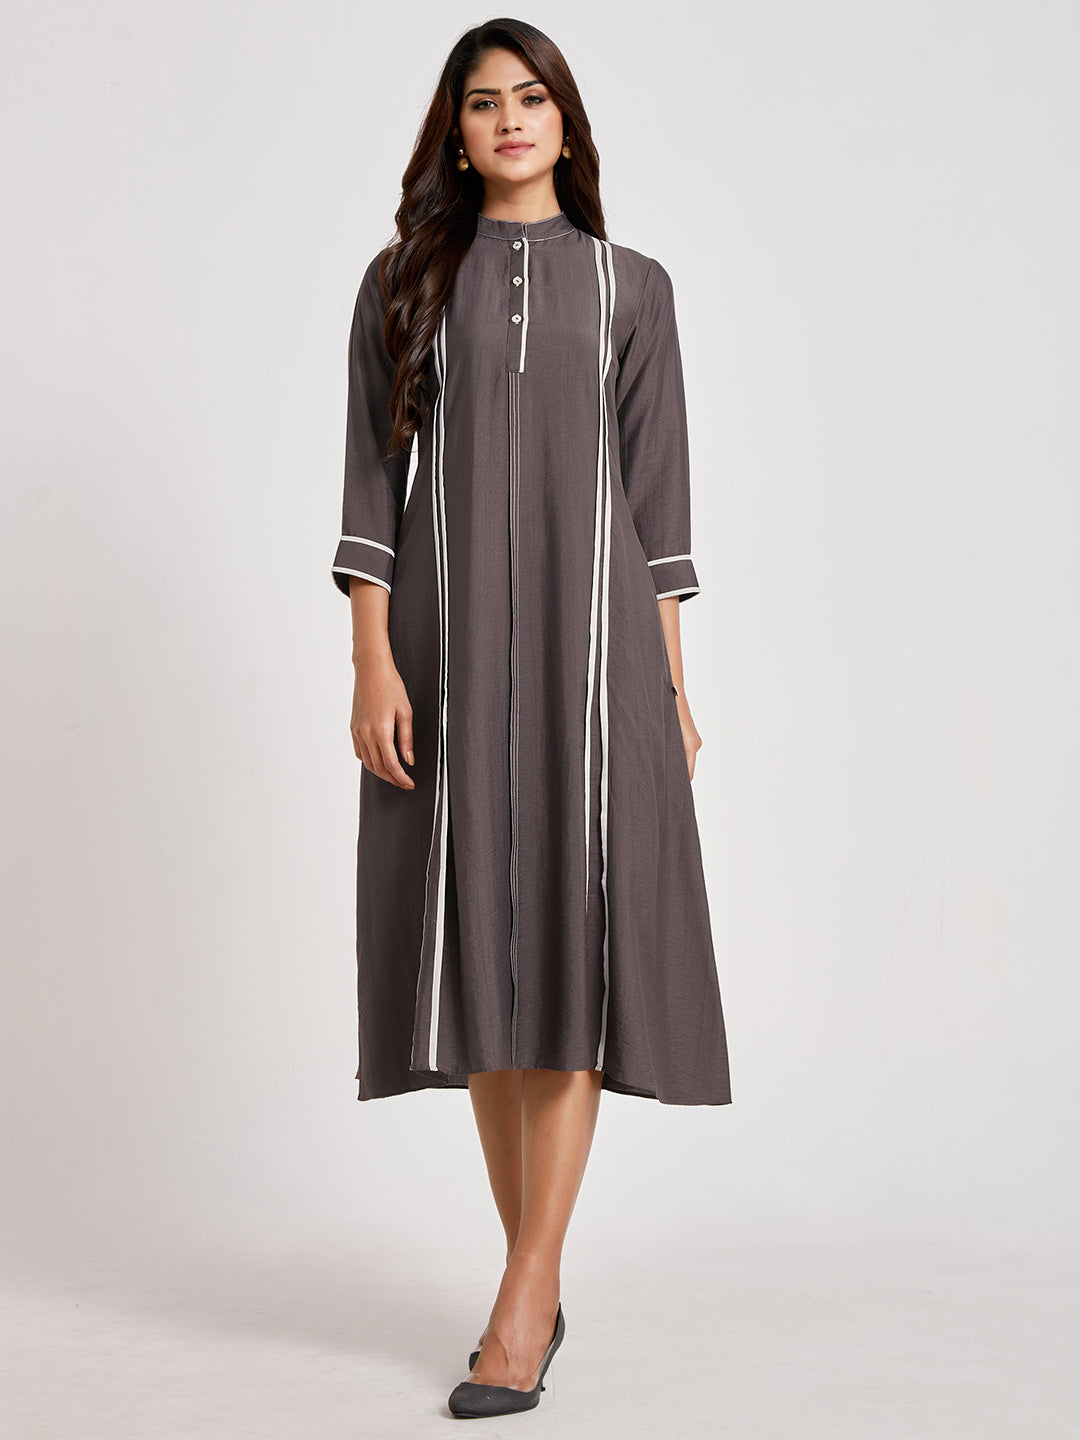 Dim Grey A-Line Dress With Mock Buttons - ARH1154